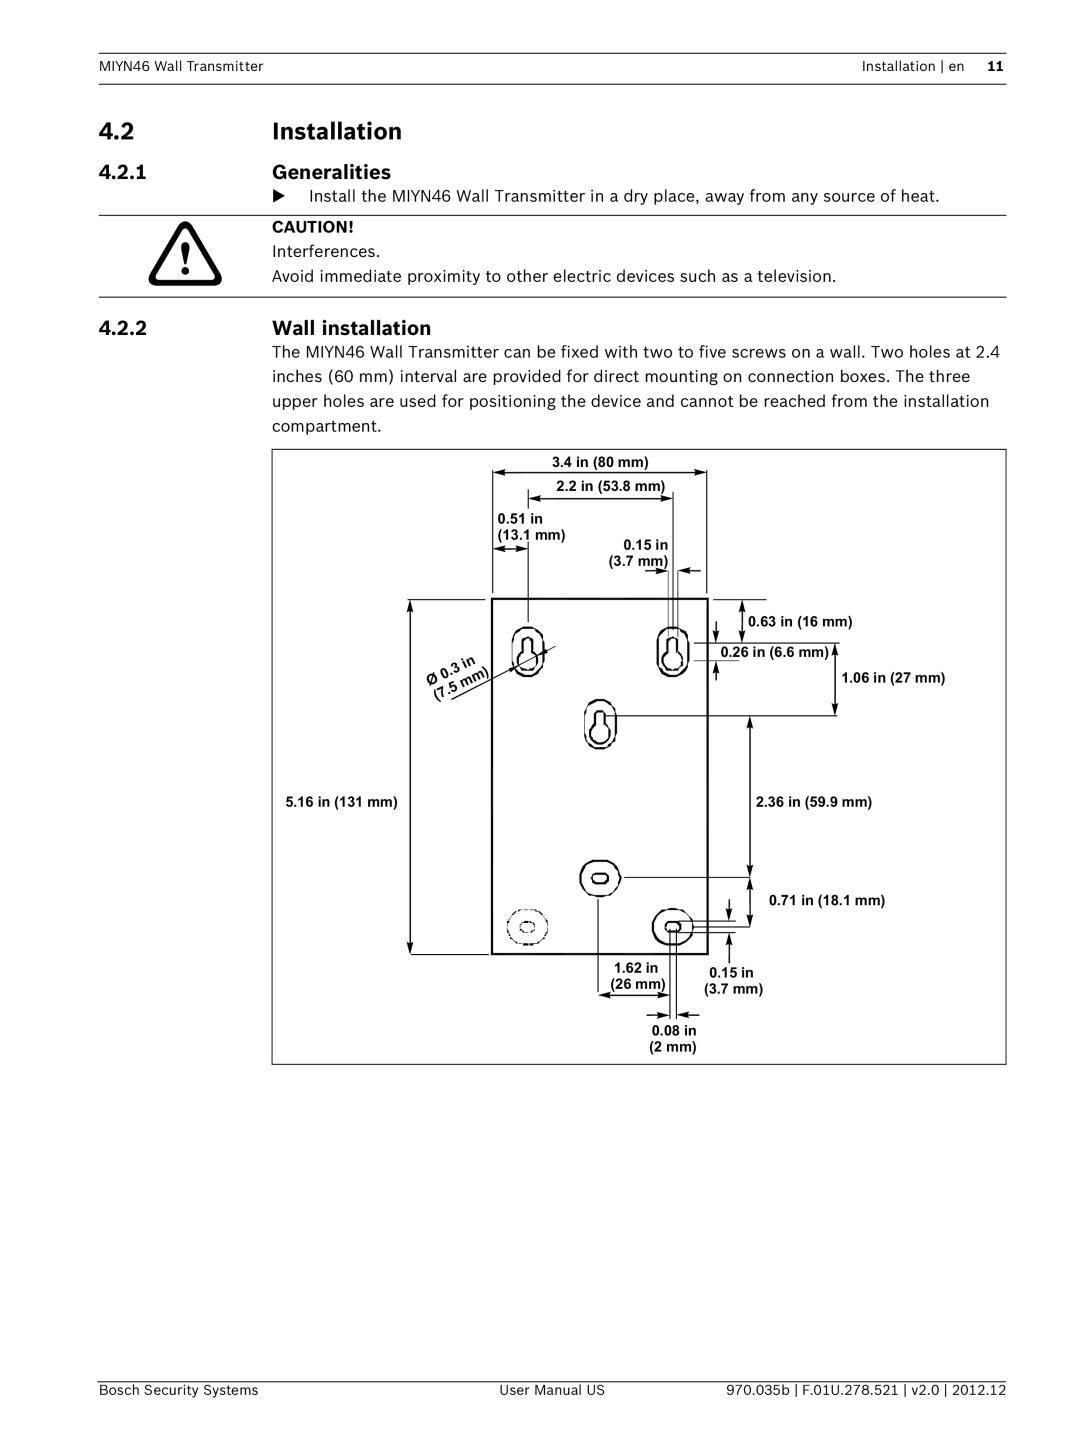 Bosch Appliances MIYN46 user manual 4.2Installation, 4.2.1Generalities, 4.2.2, Wall installation 